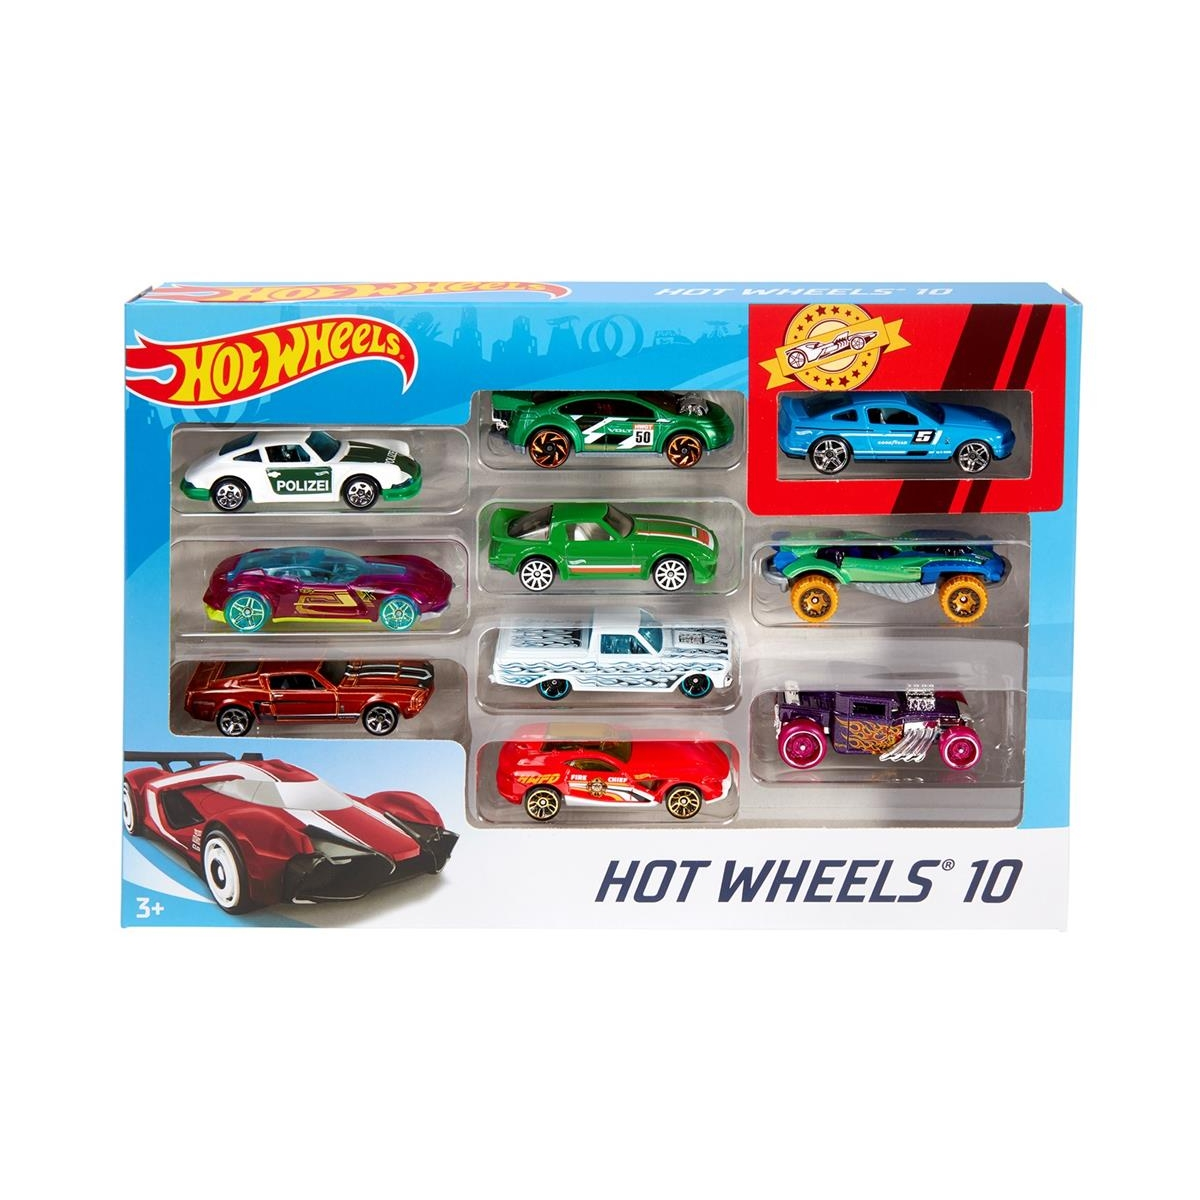 HOT WHEELS 412496 toy vehicle